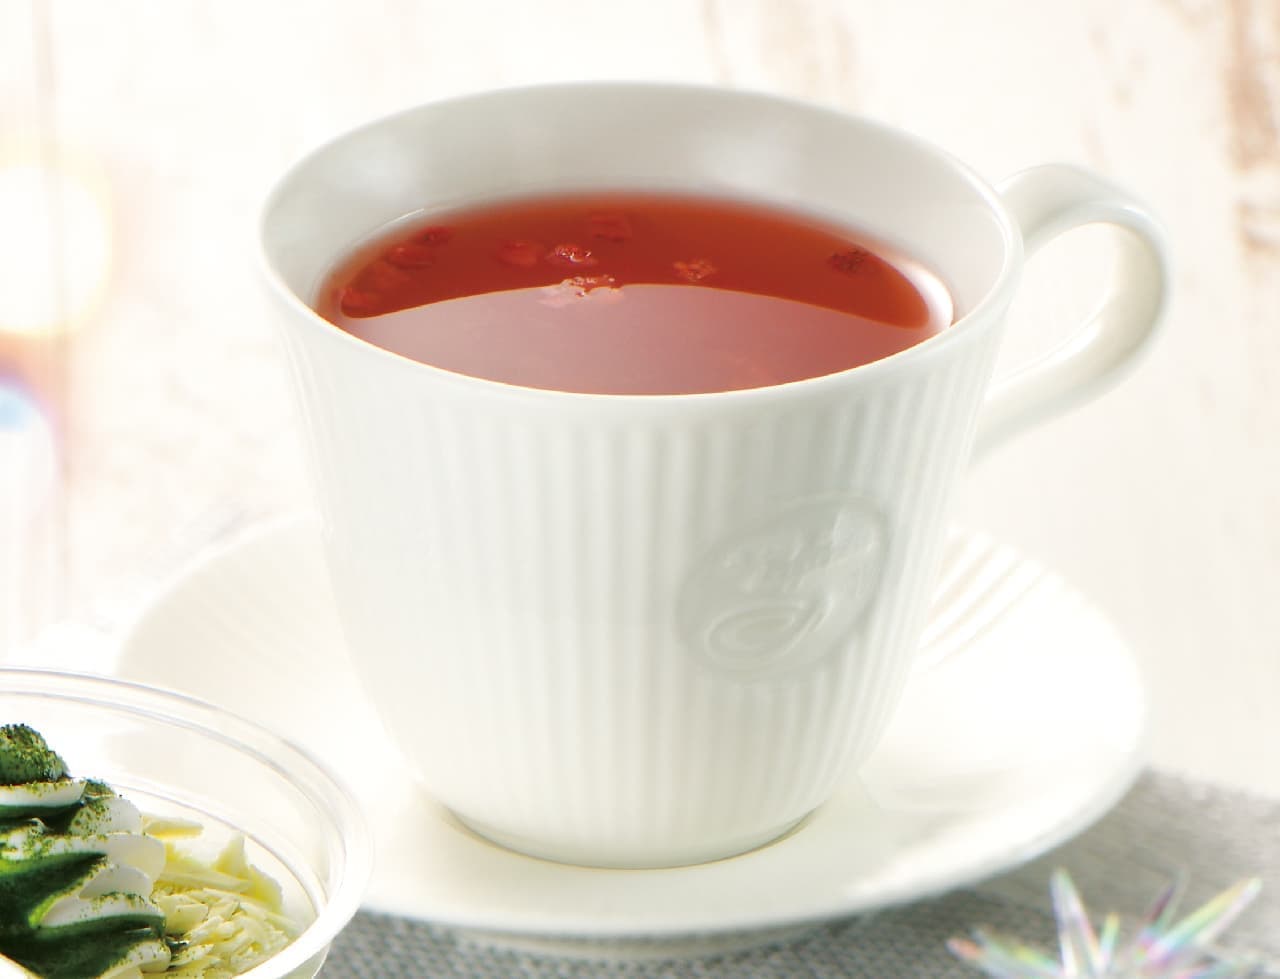 Cafe de Clie "Melting Strawberry Earl Gray Tea with Strawberry Flesh"